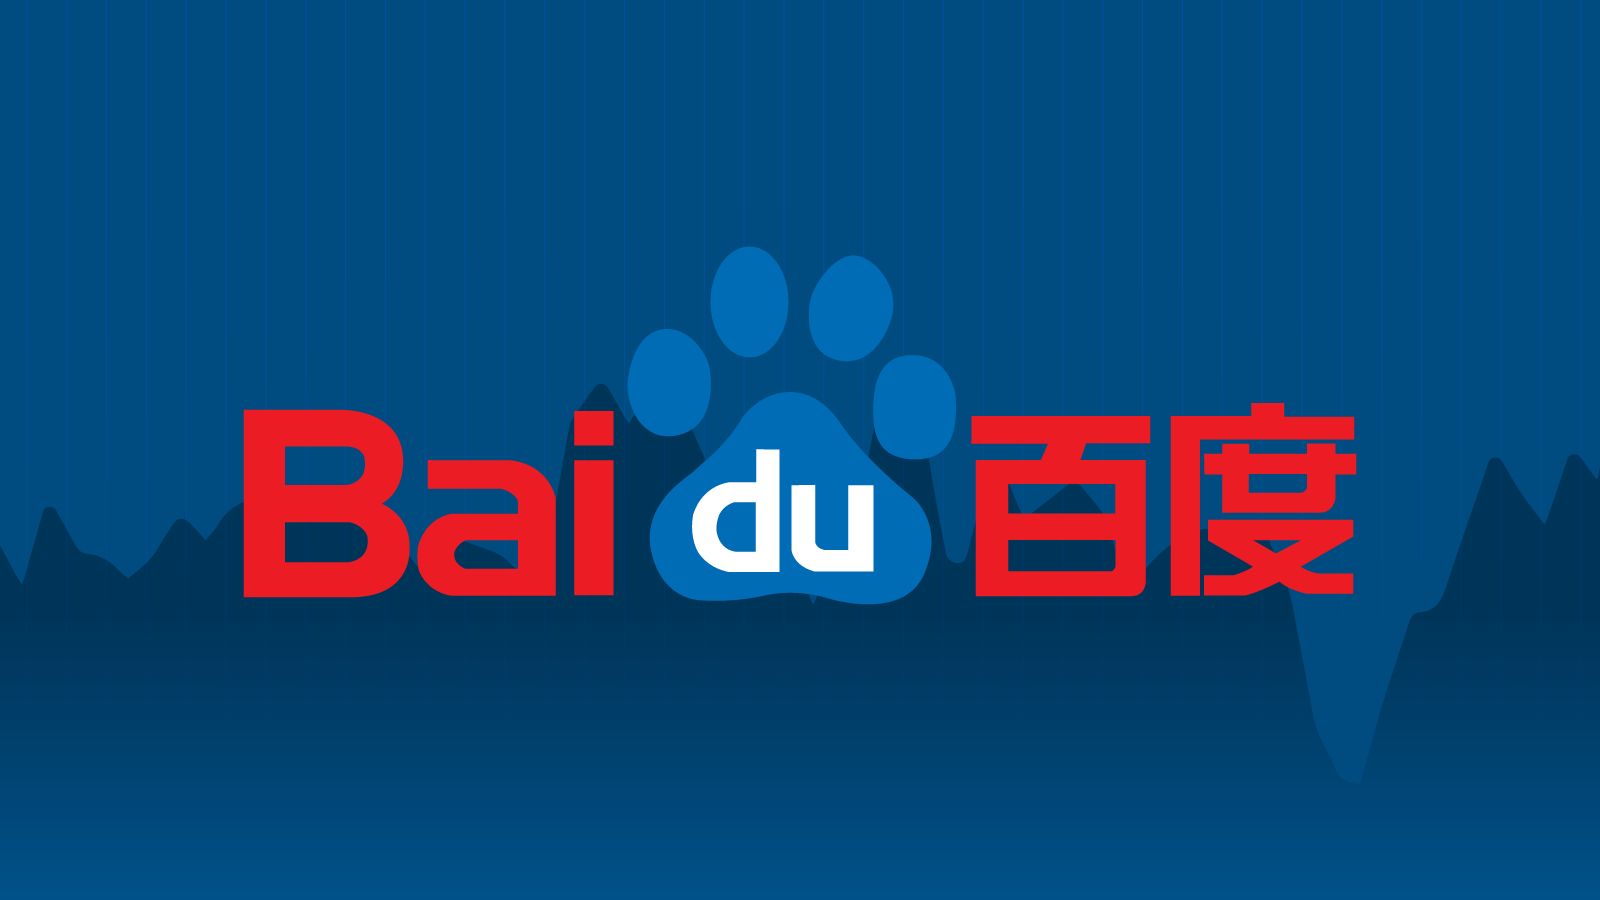 Bidu Logo PNG - 108570